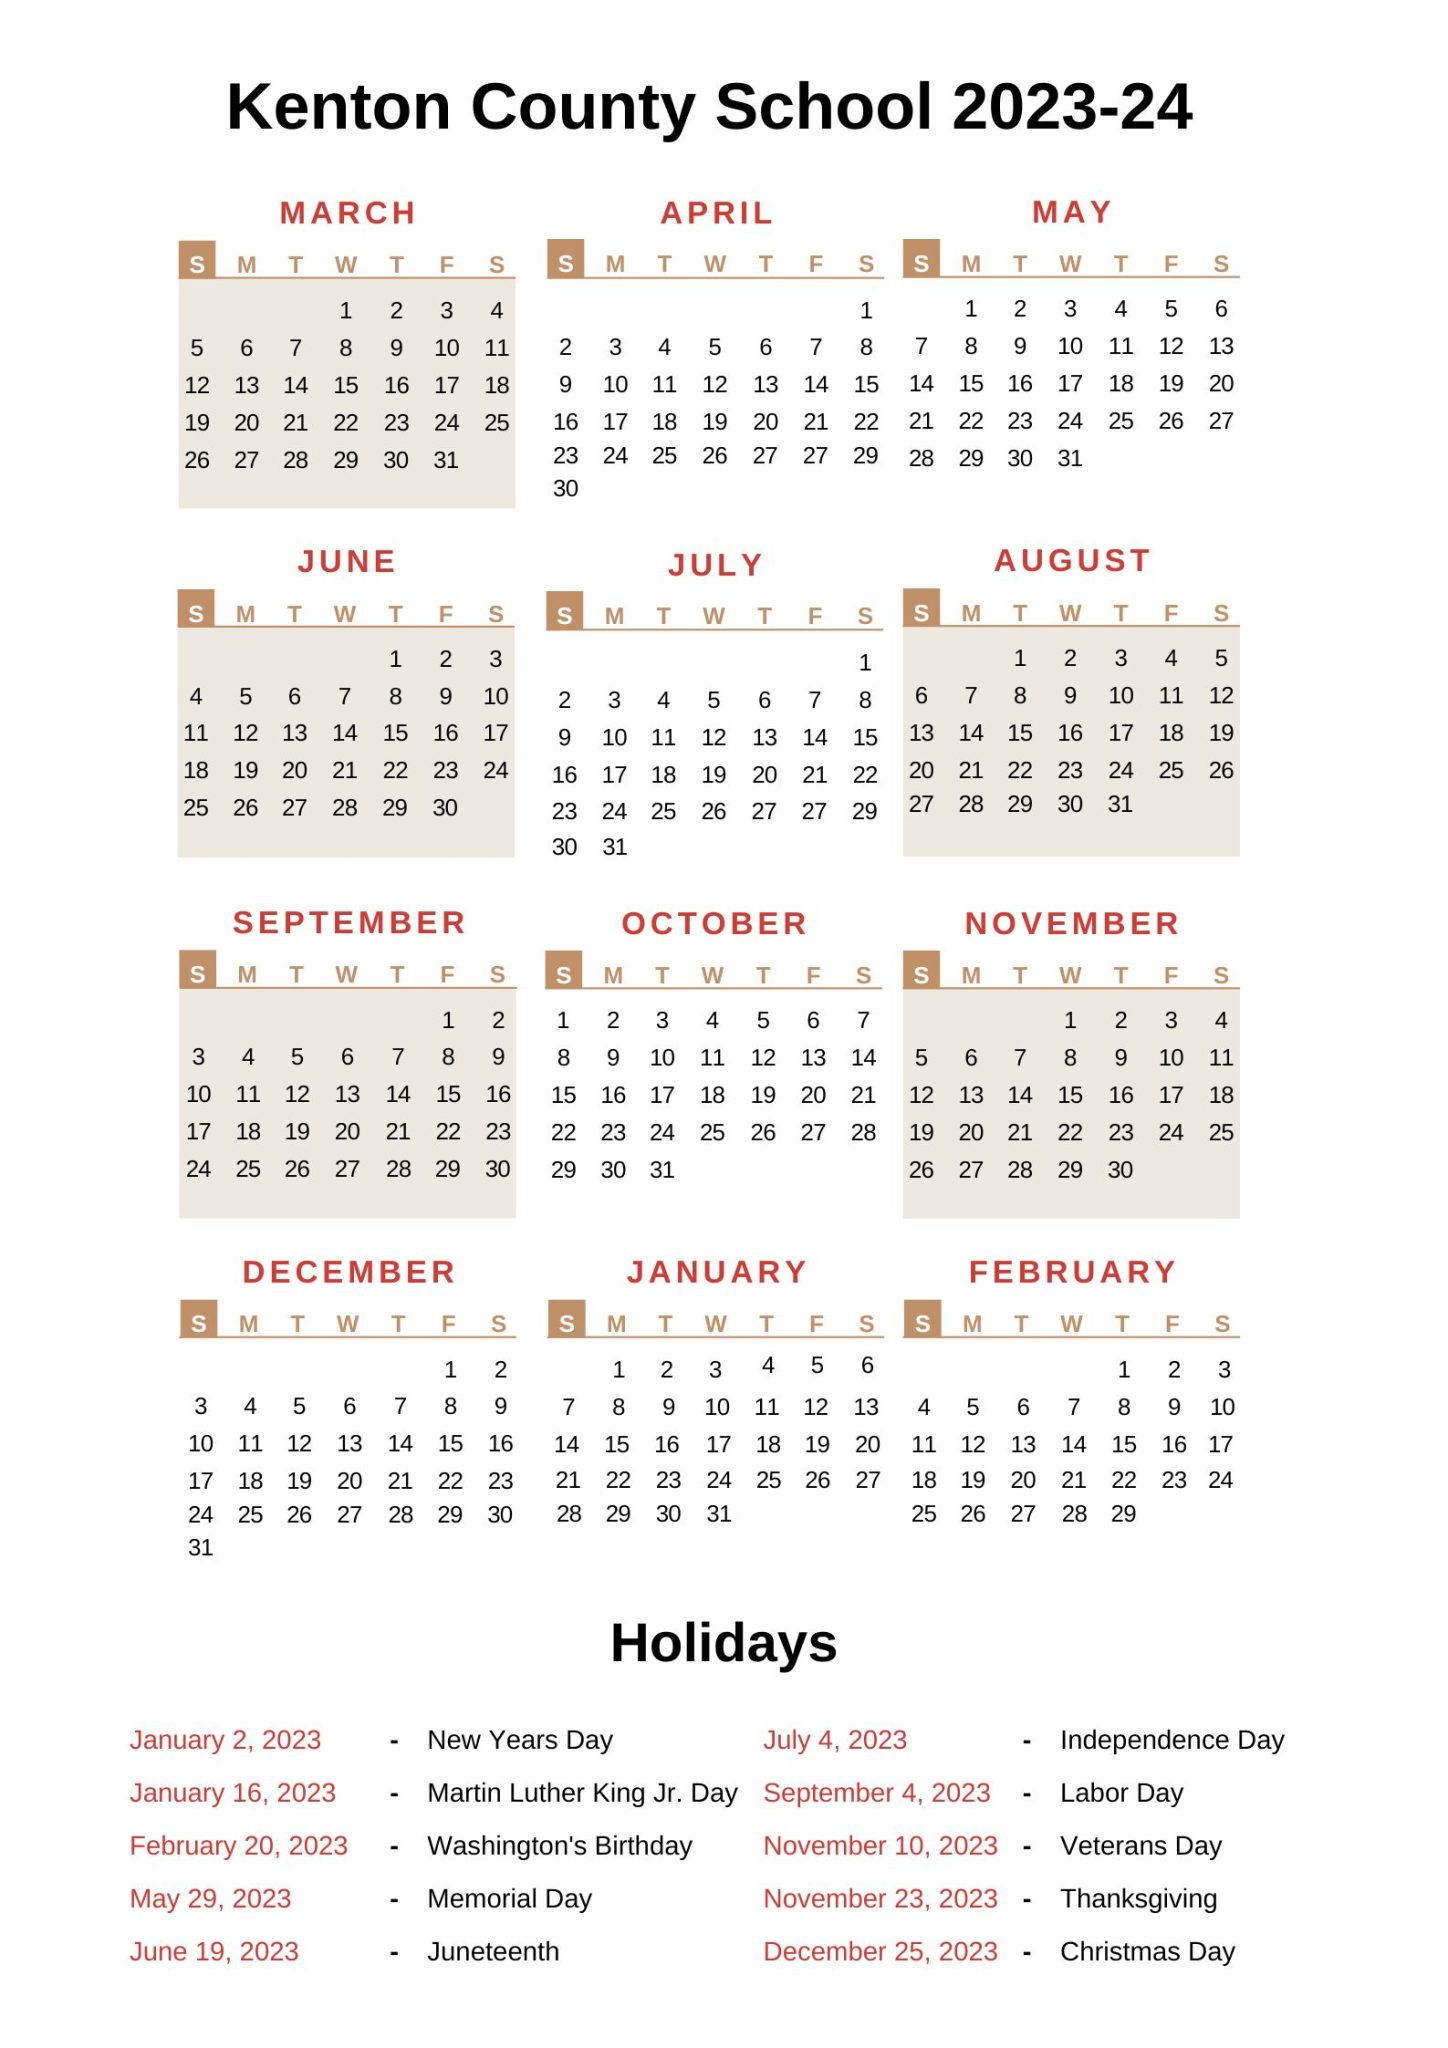 kenton-county-schools-calendar-kcs-2023-24-with-holidays